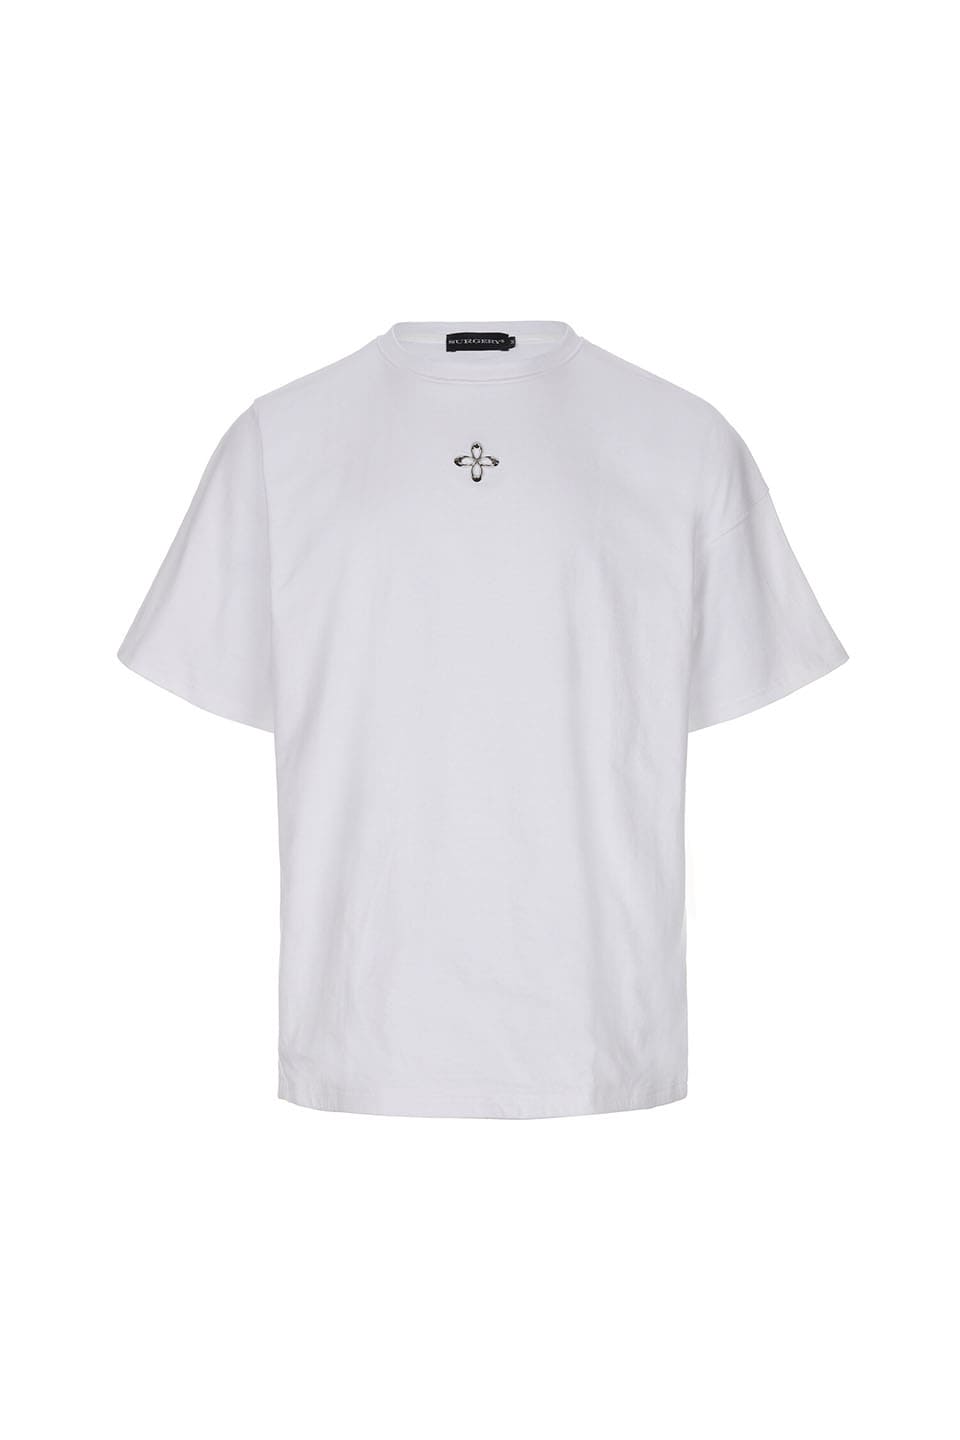 Unbalance Metal Clover Logo Slim T-Shirts